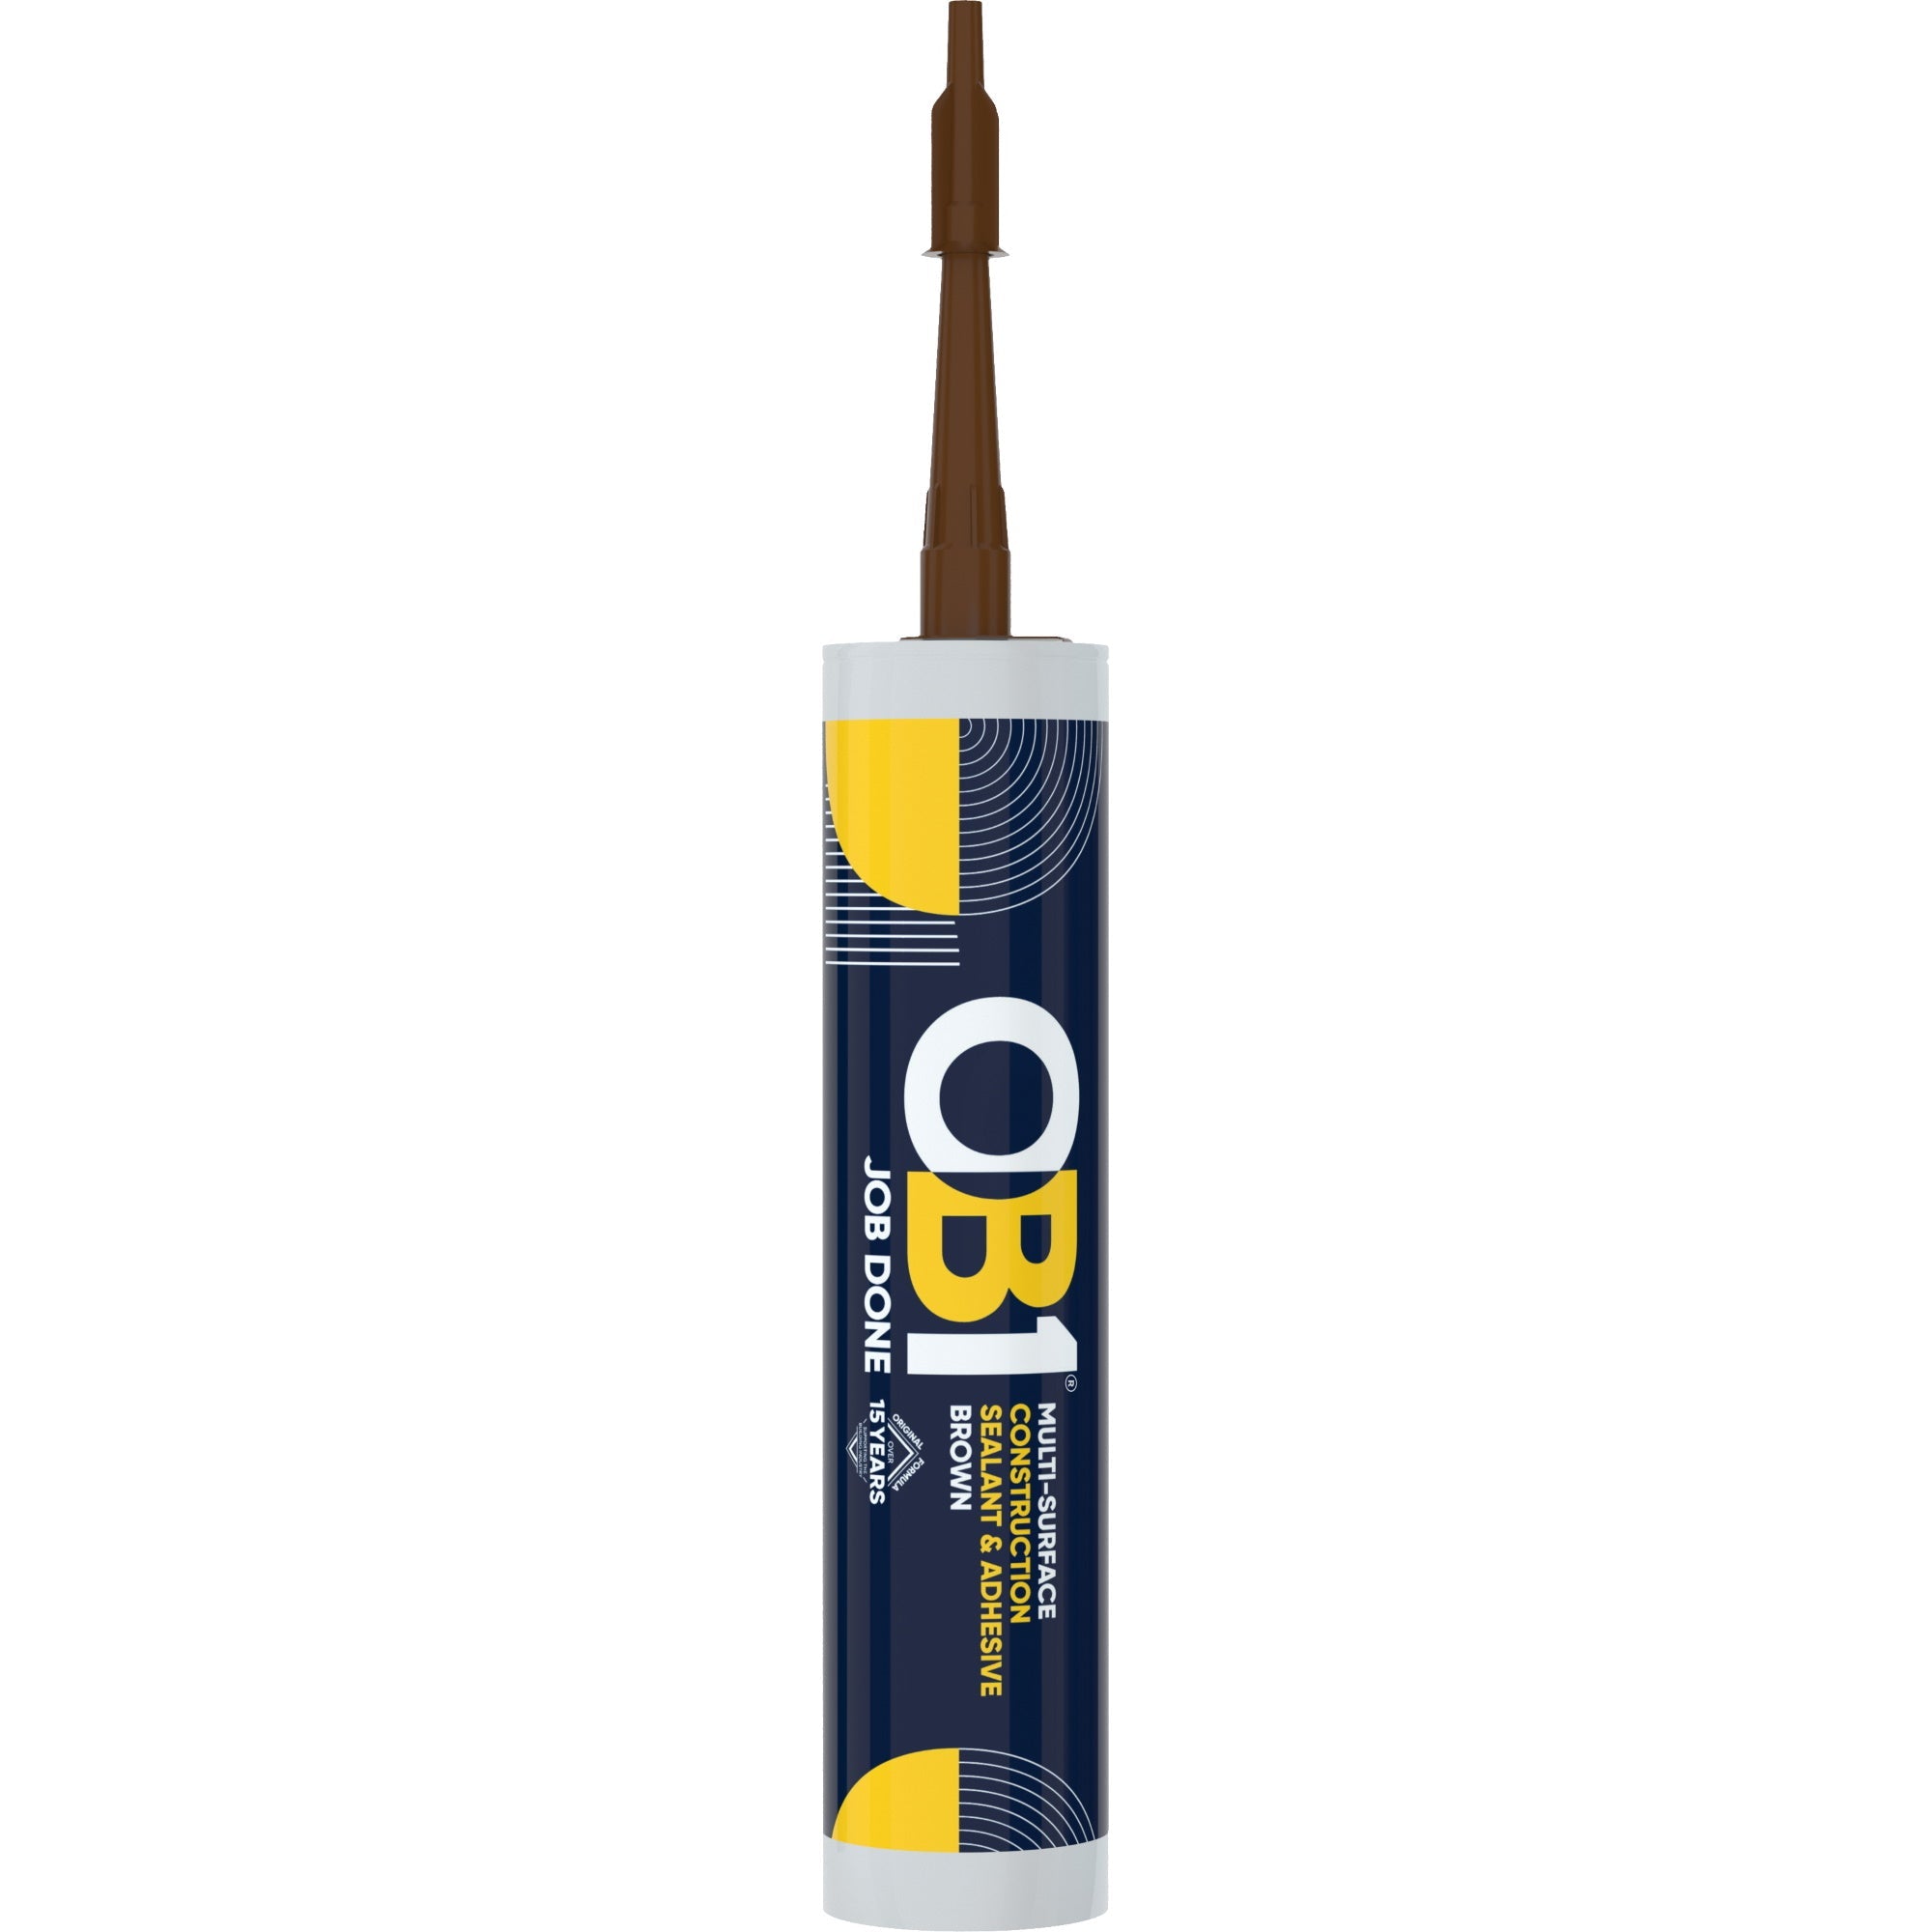 OB1 Job Done Multi-Surface Sealant & Adhesive 290ml Cartridge - Brown - Premium Sealants from Bostik - Just $12.5! Shop now at W Hurst & Son (IW) Ltd